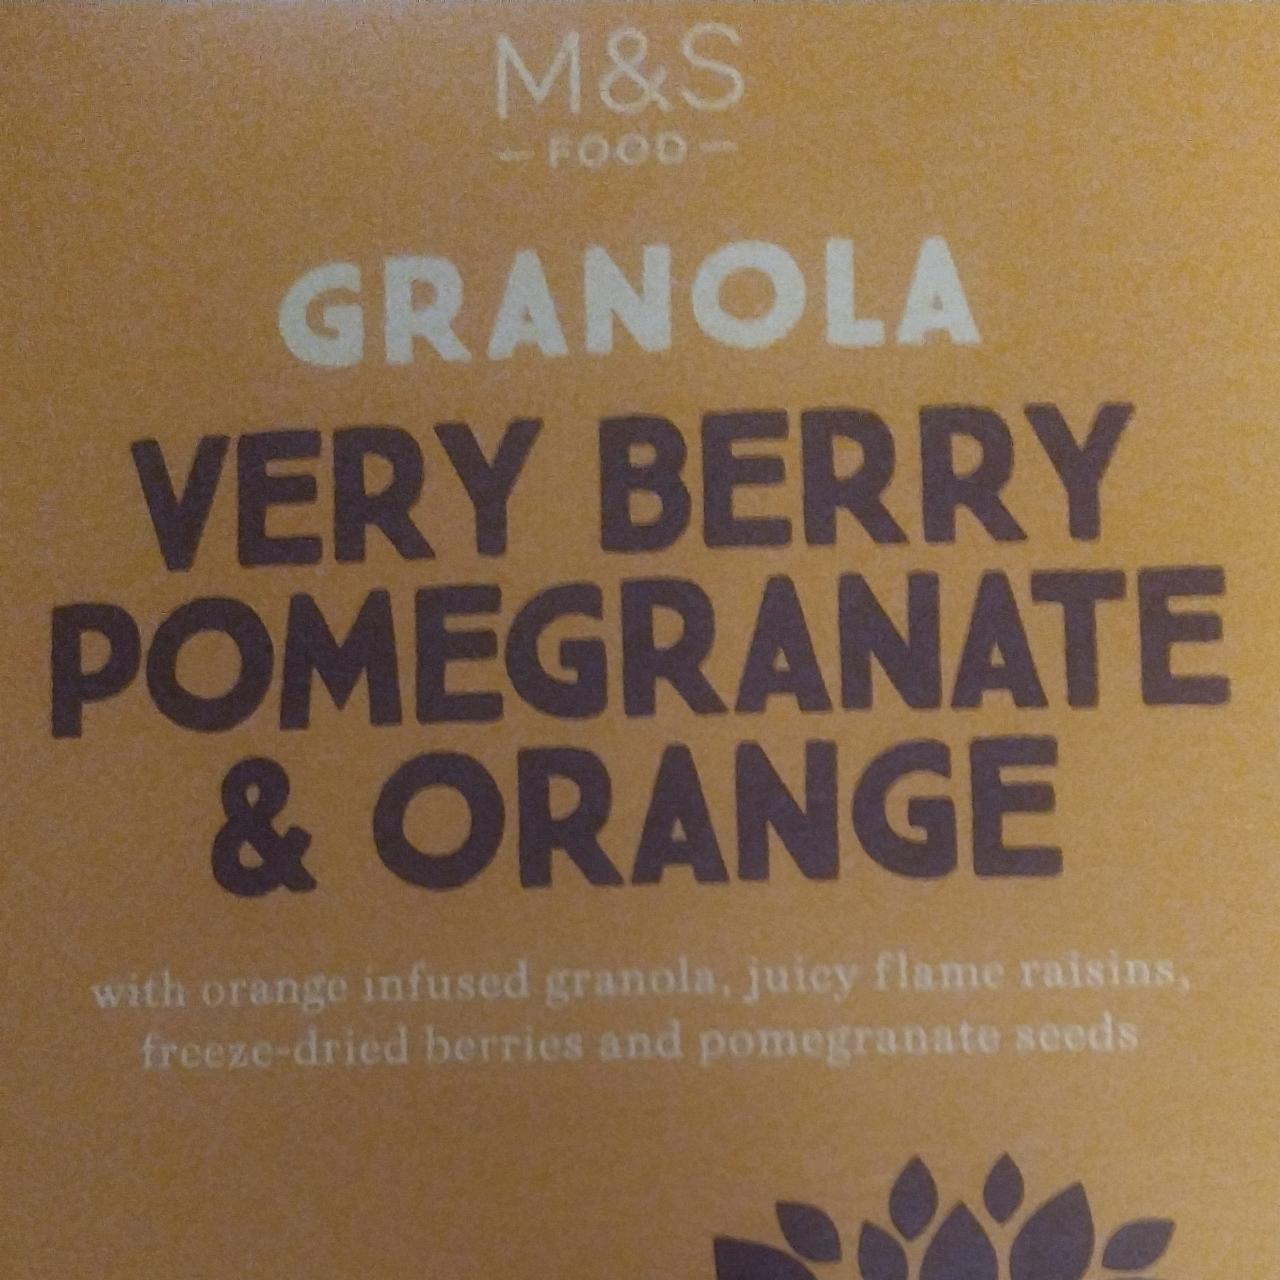 Fotografie - granola Very Berry Pomegranate Orange M&S Food